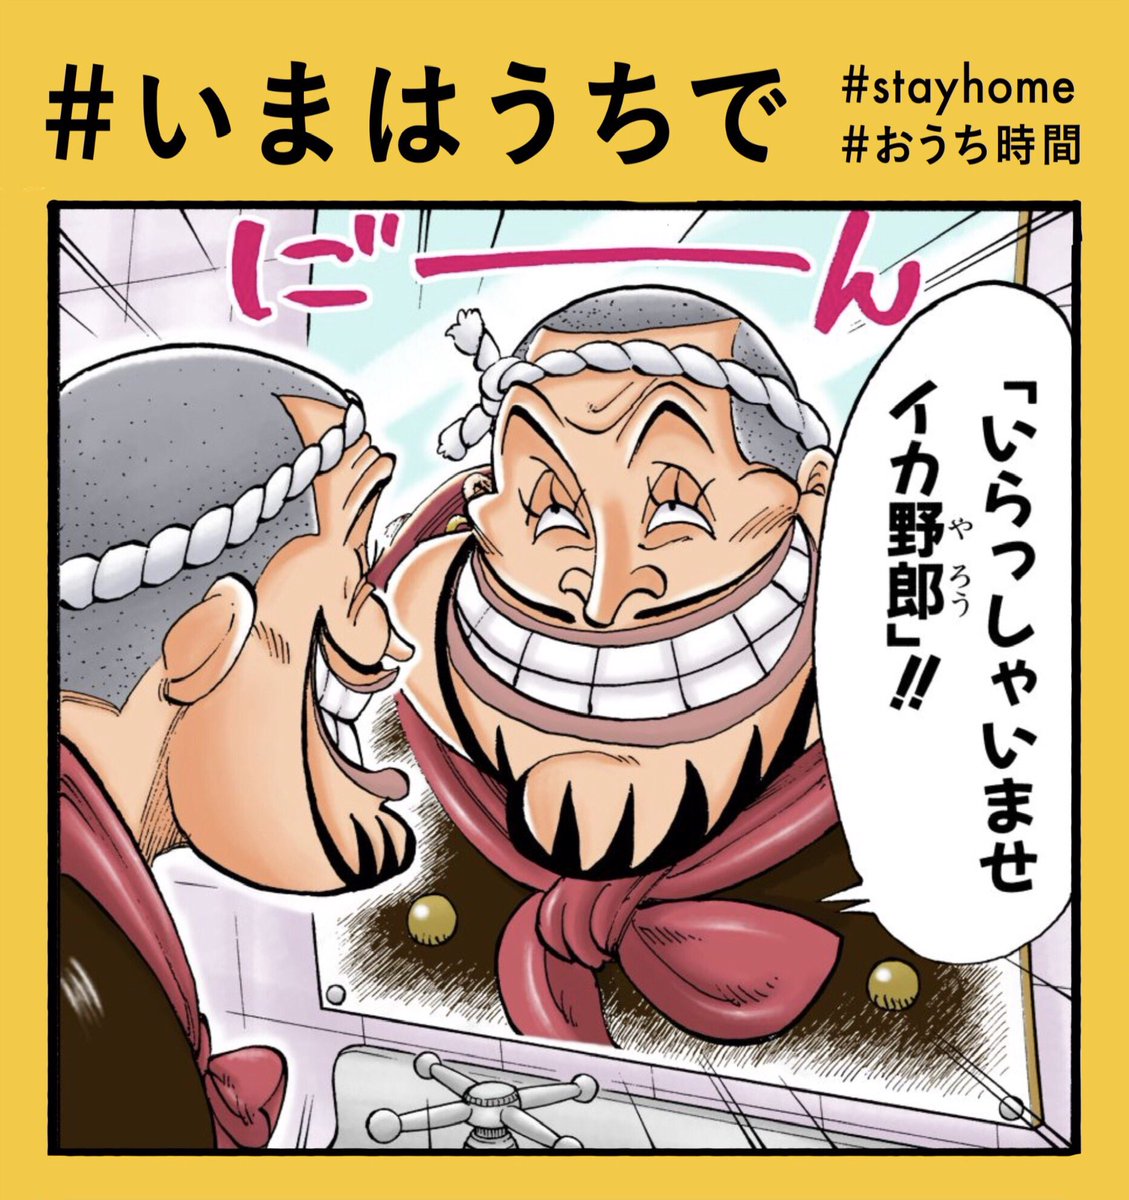 One Pieceスタッフ 公式 4月30日 パティの おうち時間 いまはうちで 笑顔の練習は欠かさない Stayhome